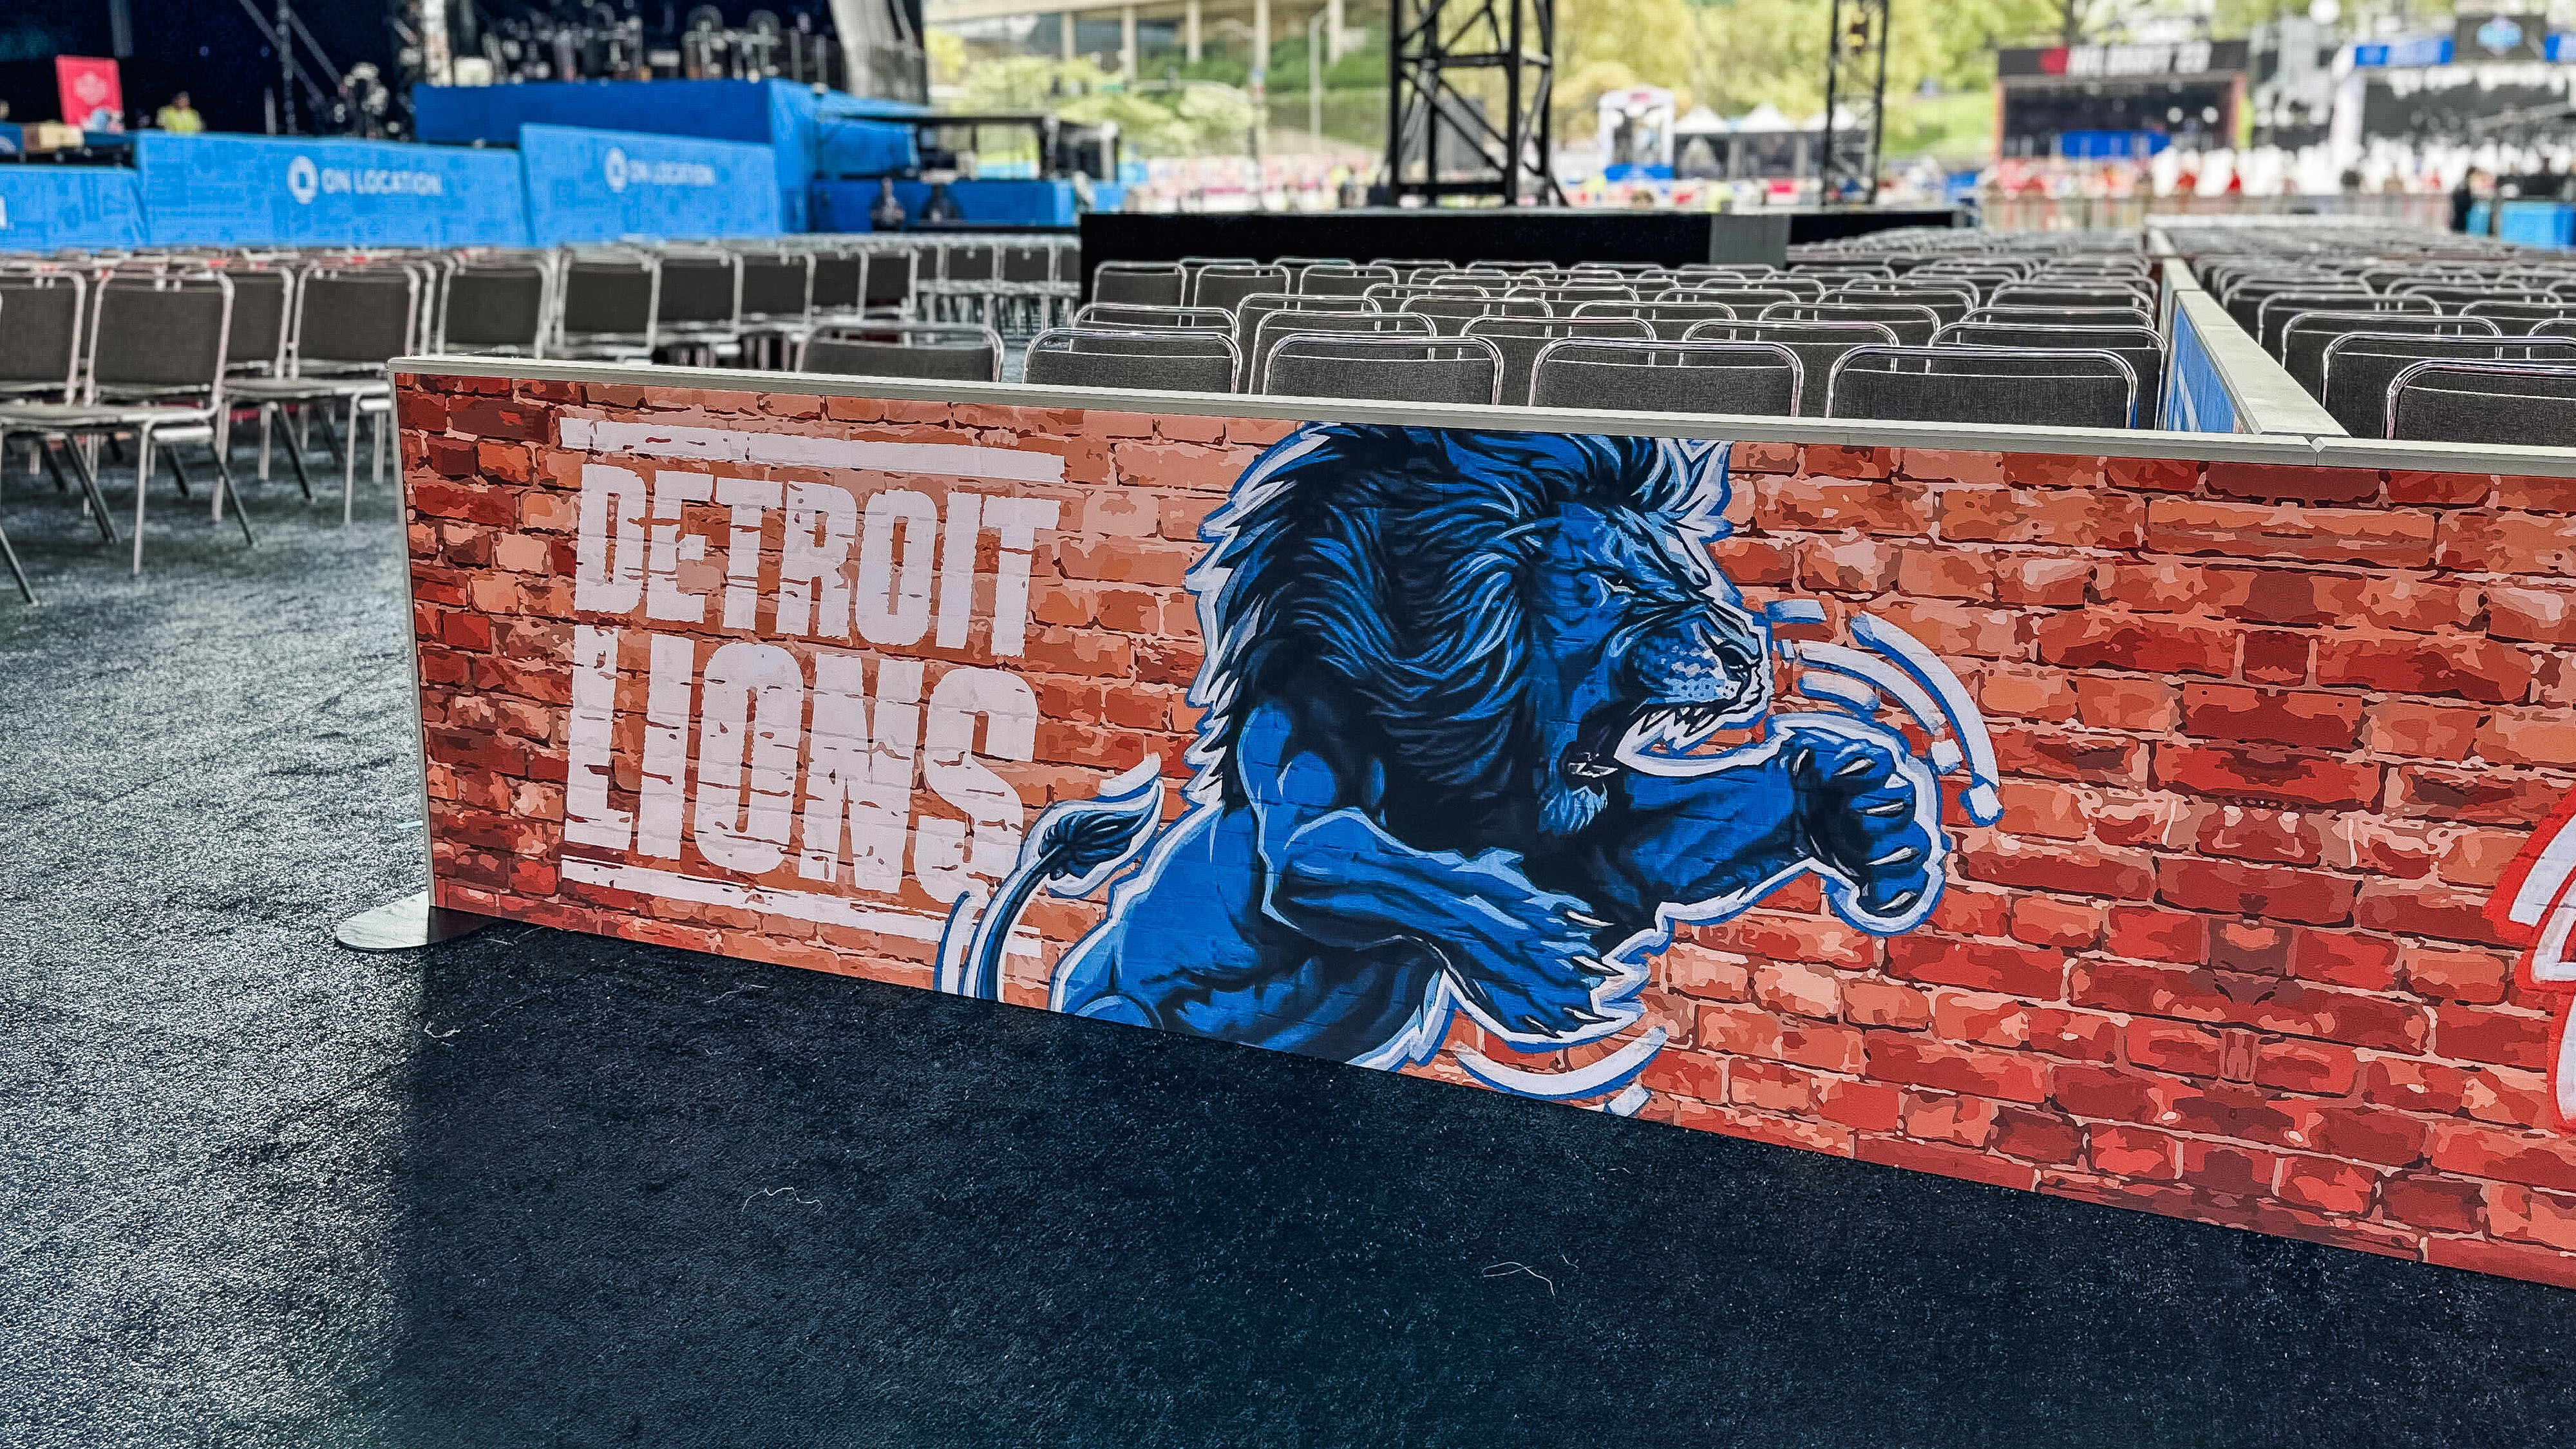 Detroit Lions celebrate 90th season with commemorative logo, jersey patch -  CBS Detroit